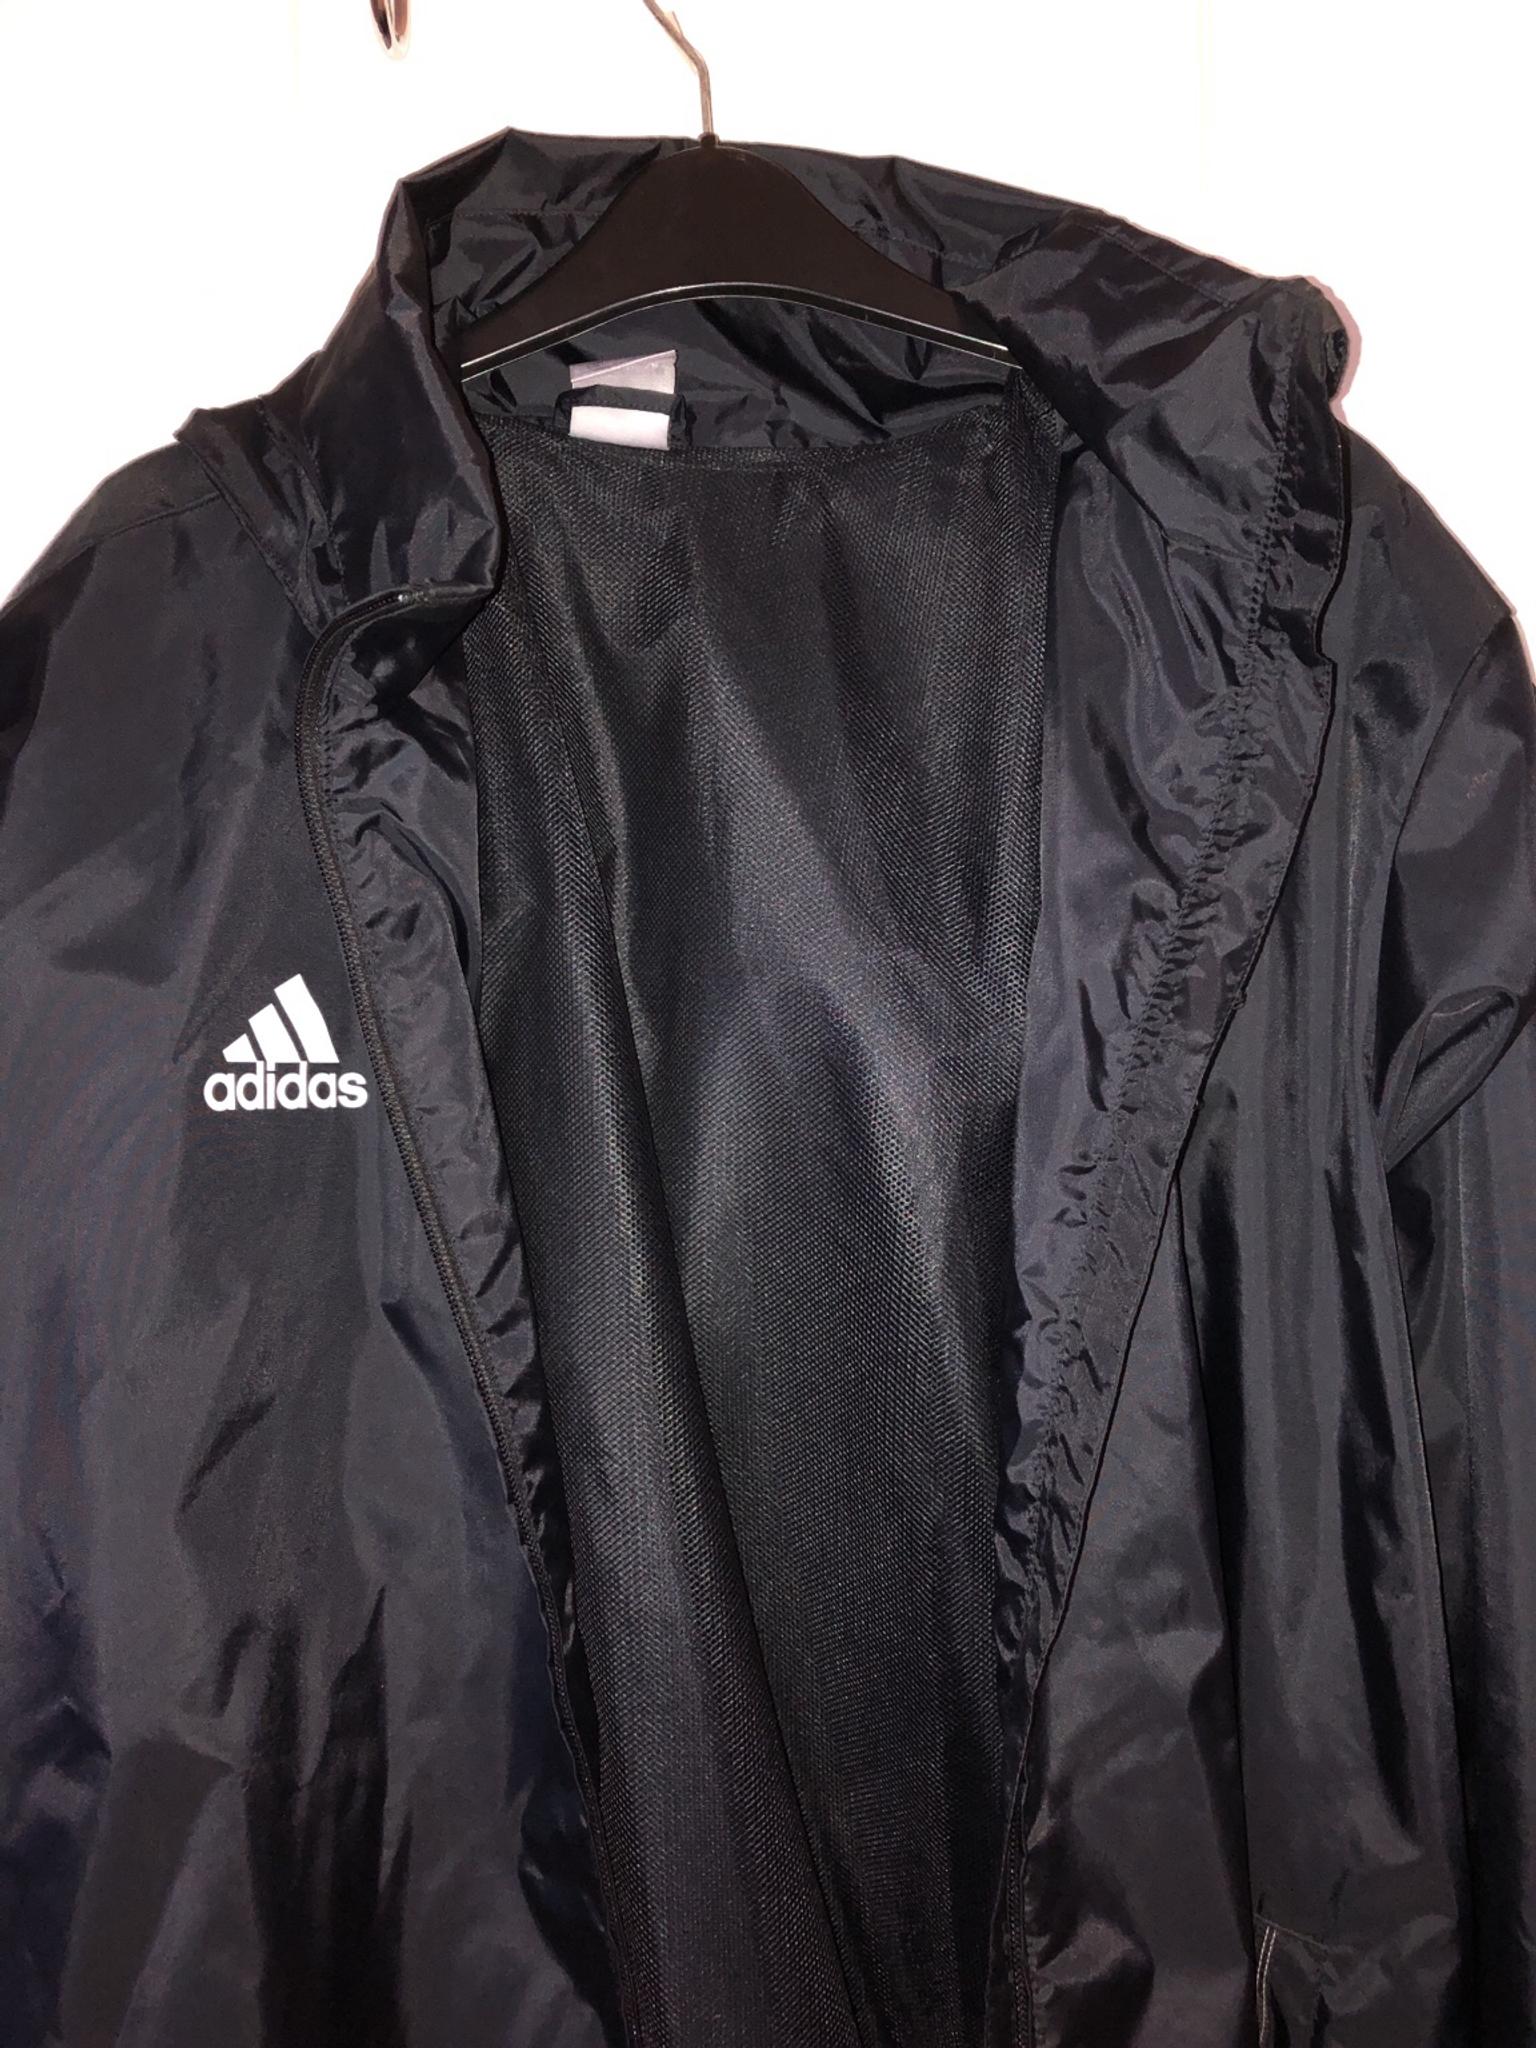 adidas condition rain jacket mens